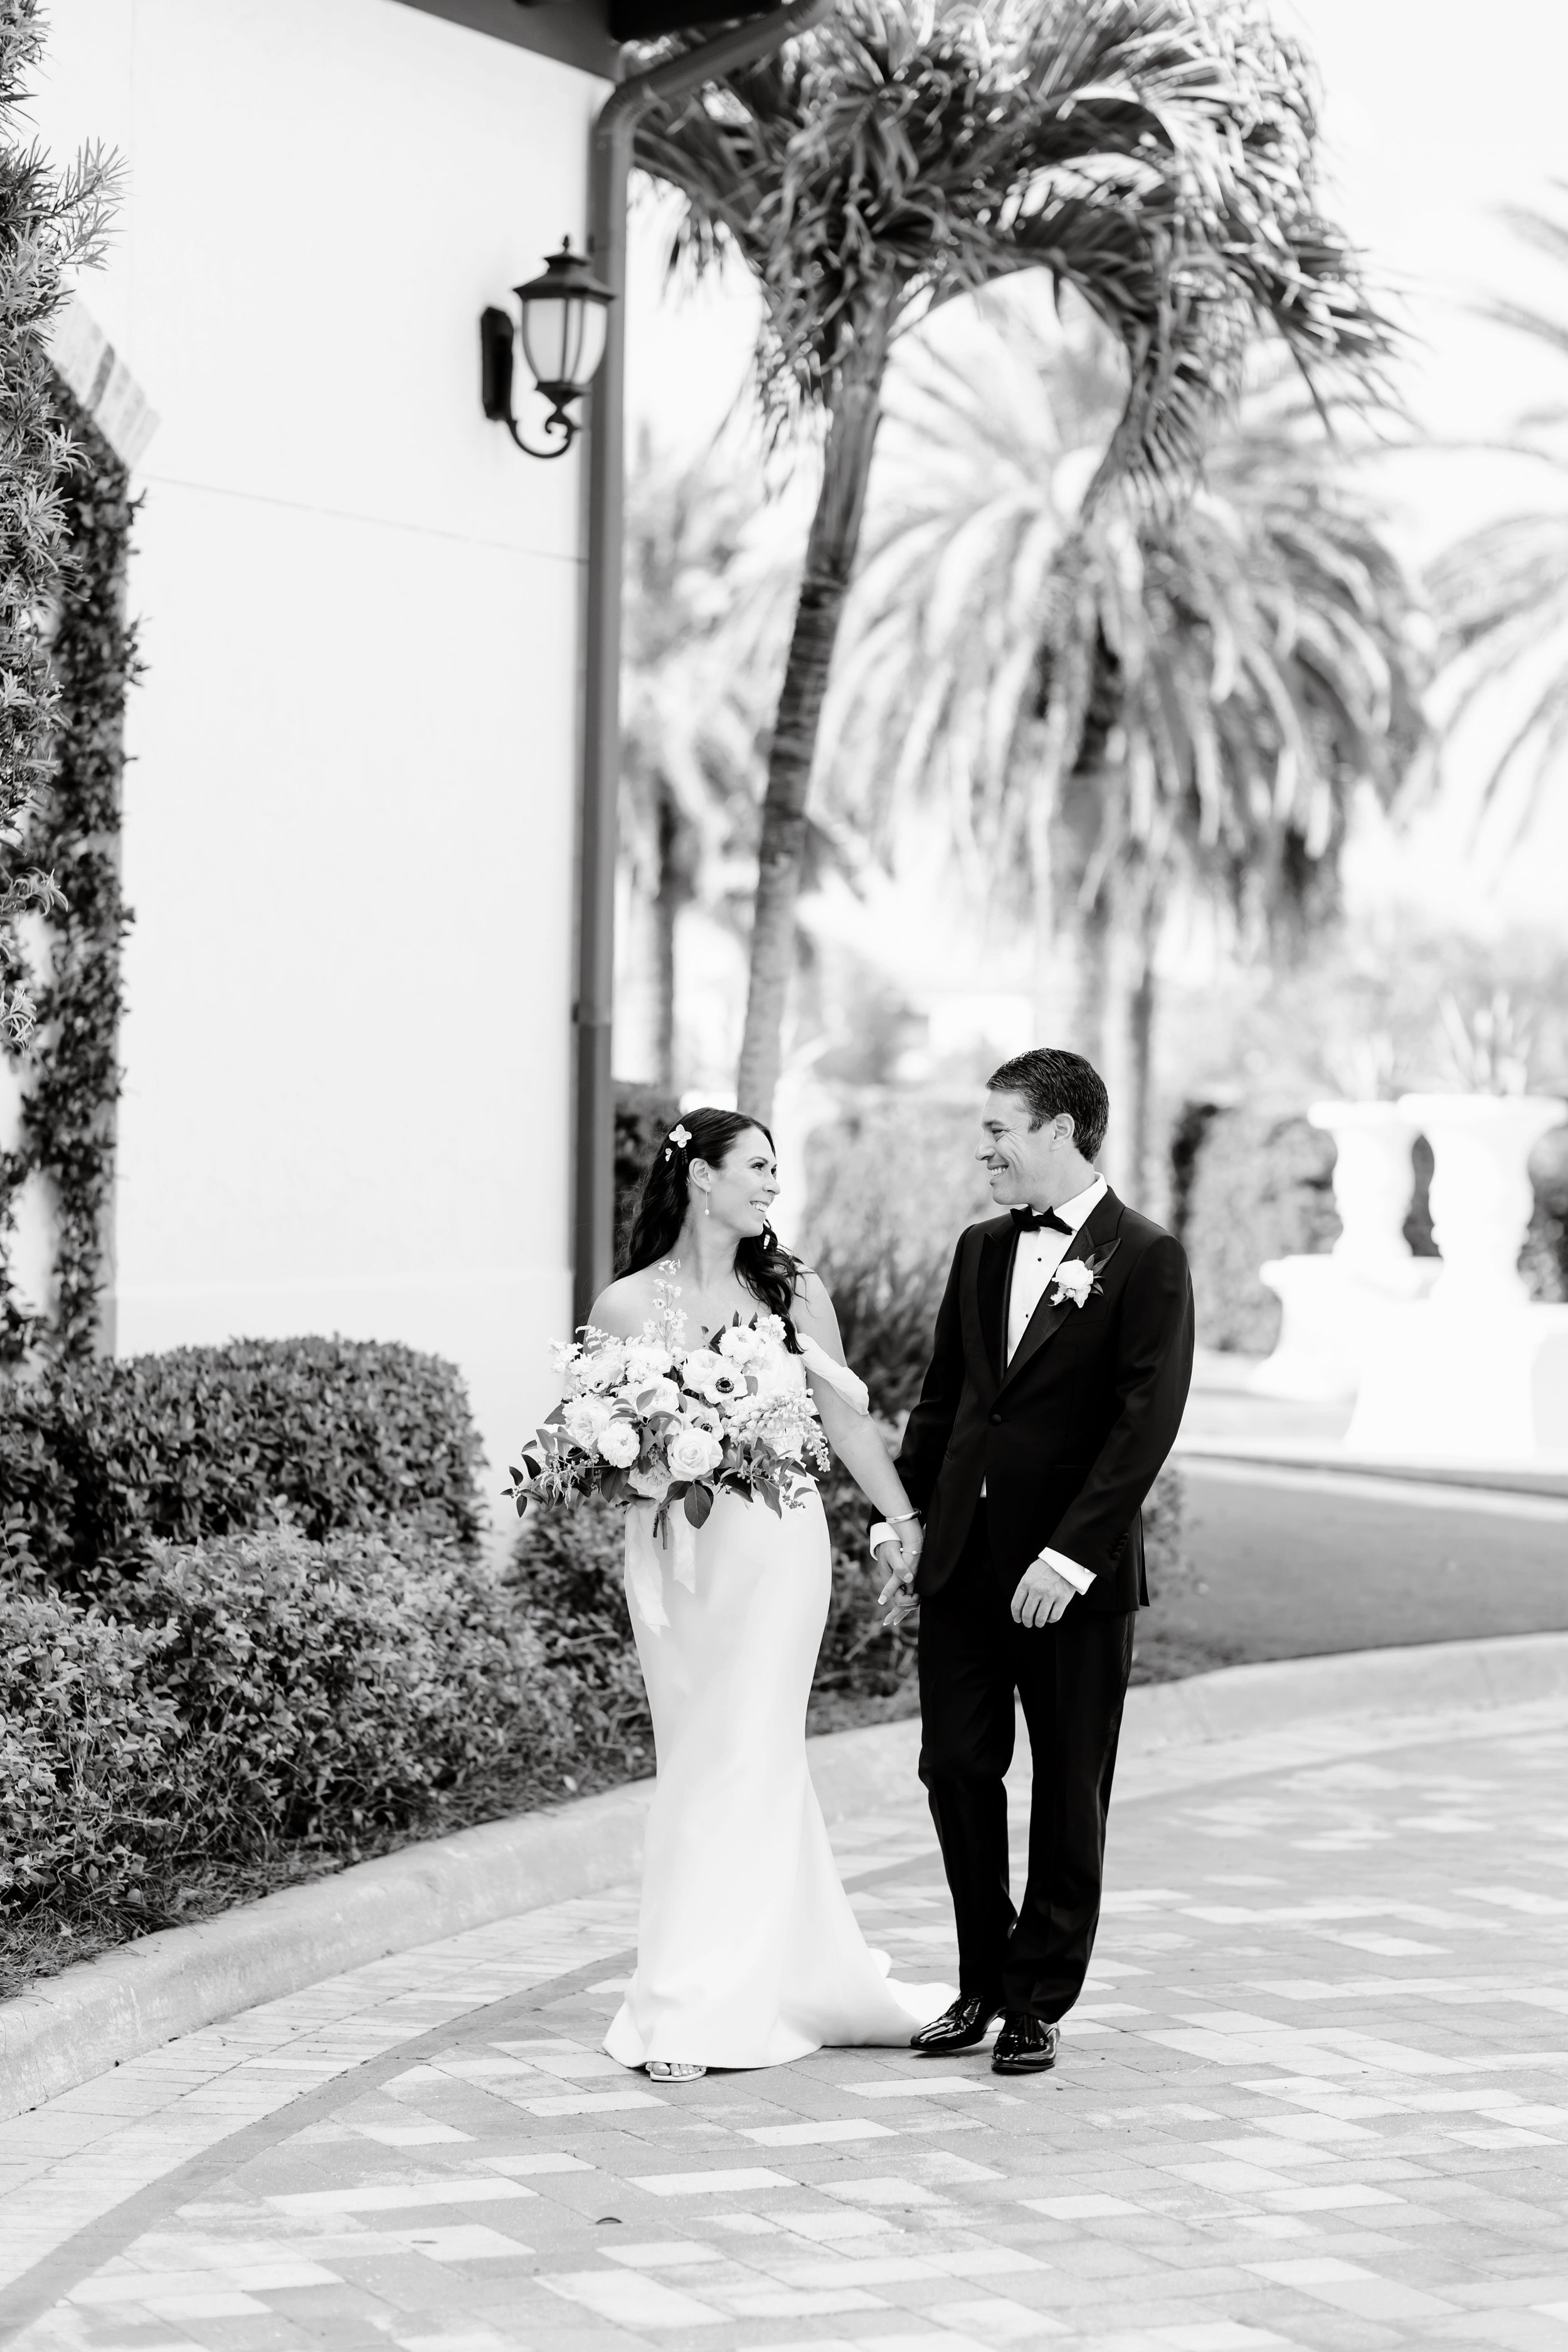 Black and white wedding portraits